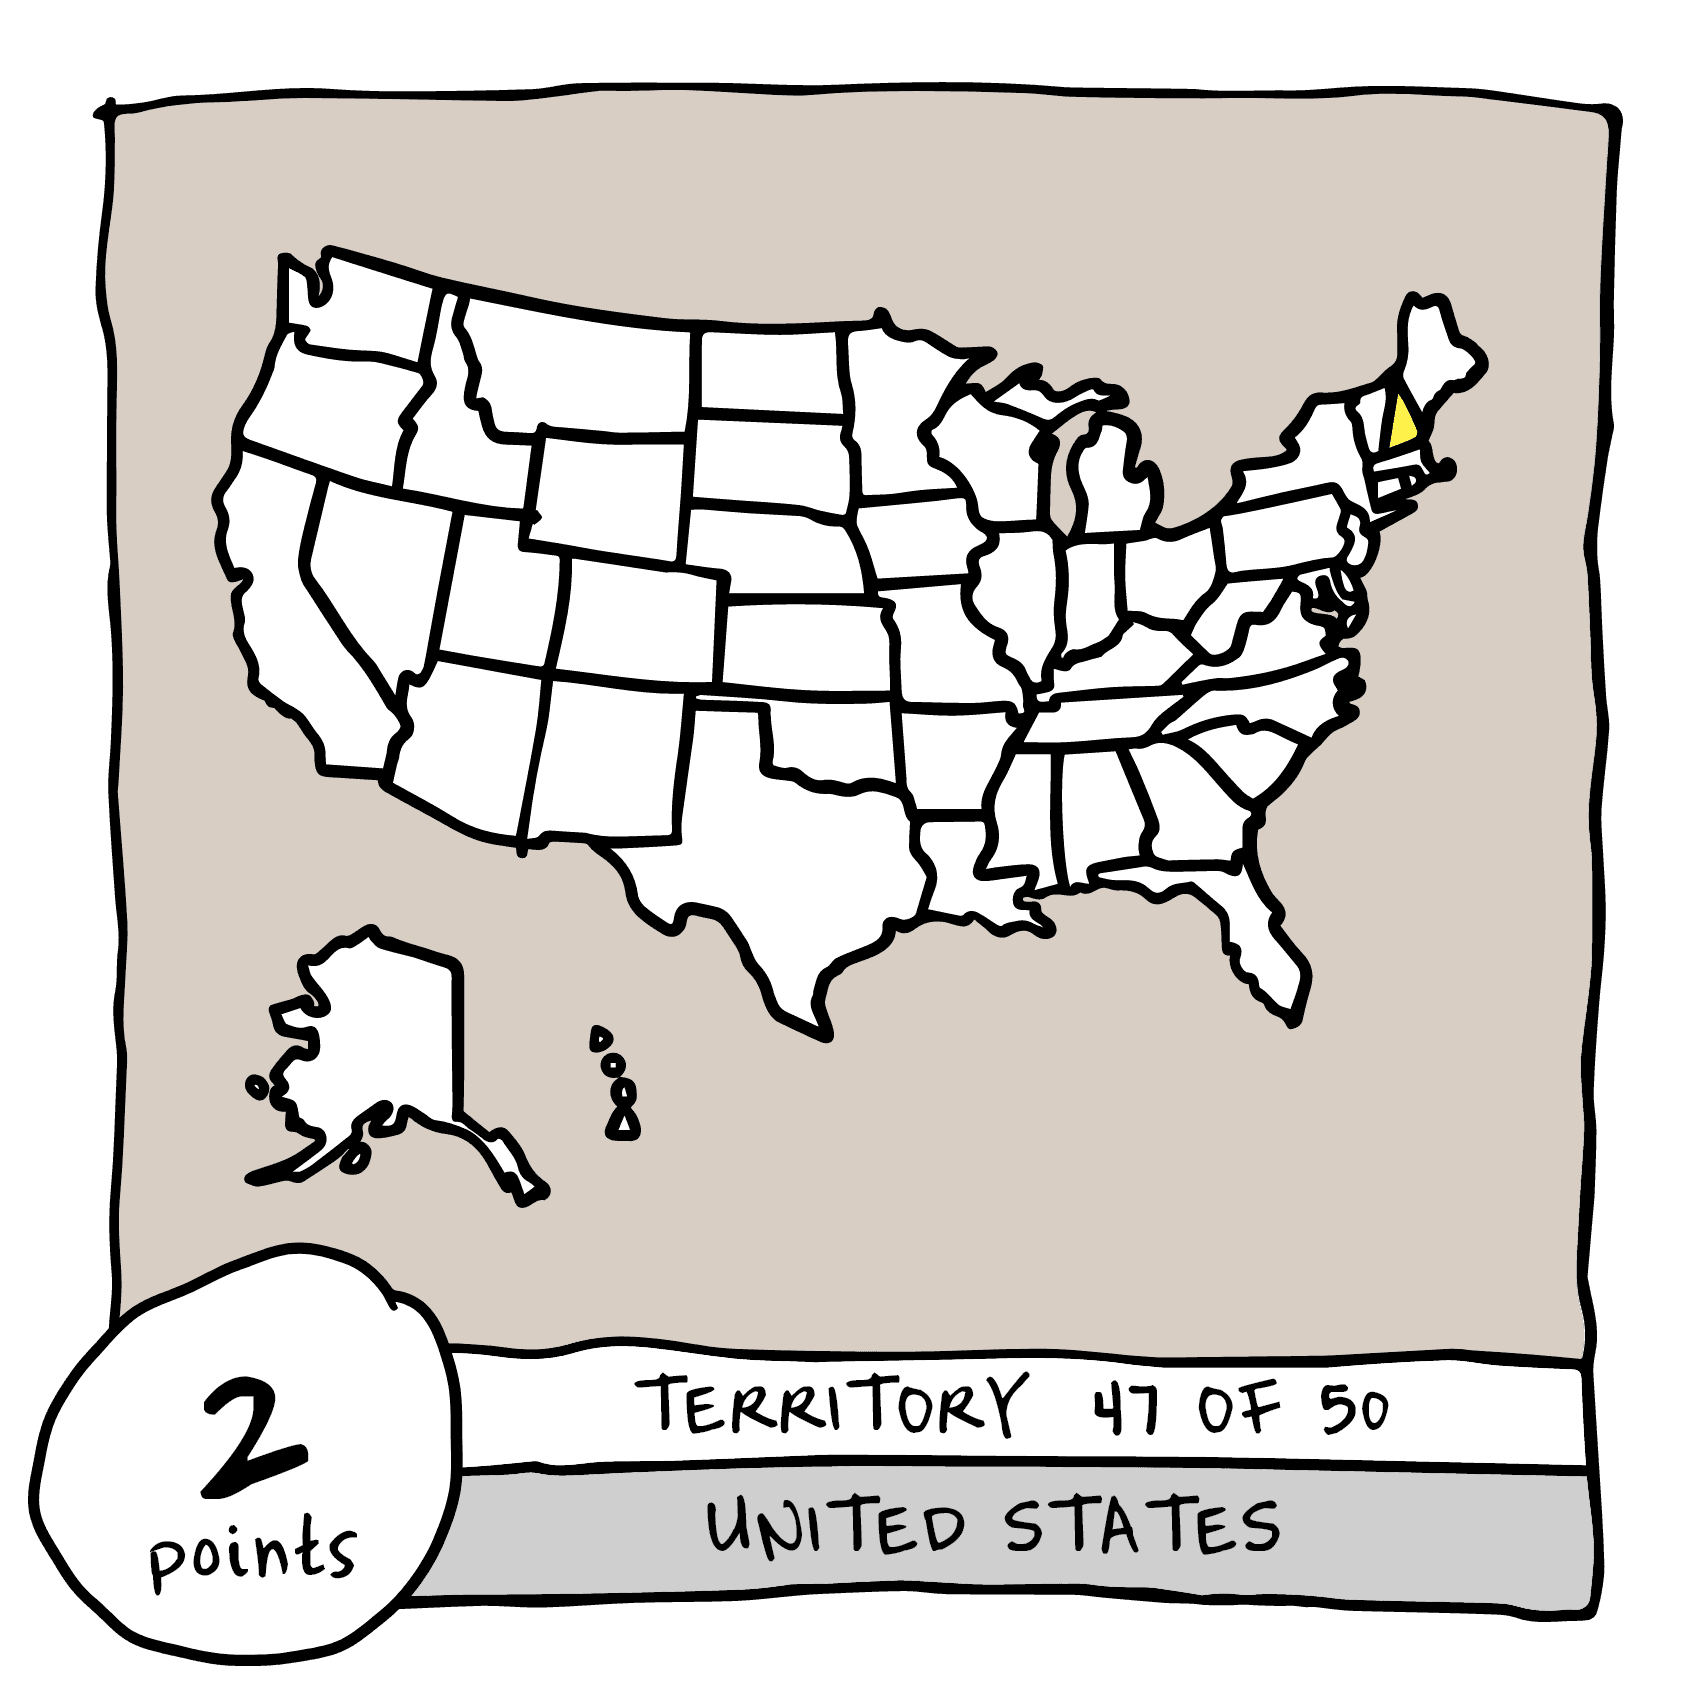 Territory 47/50 - United States (New Hampshire)